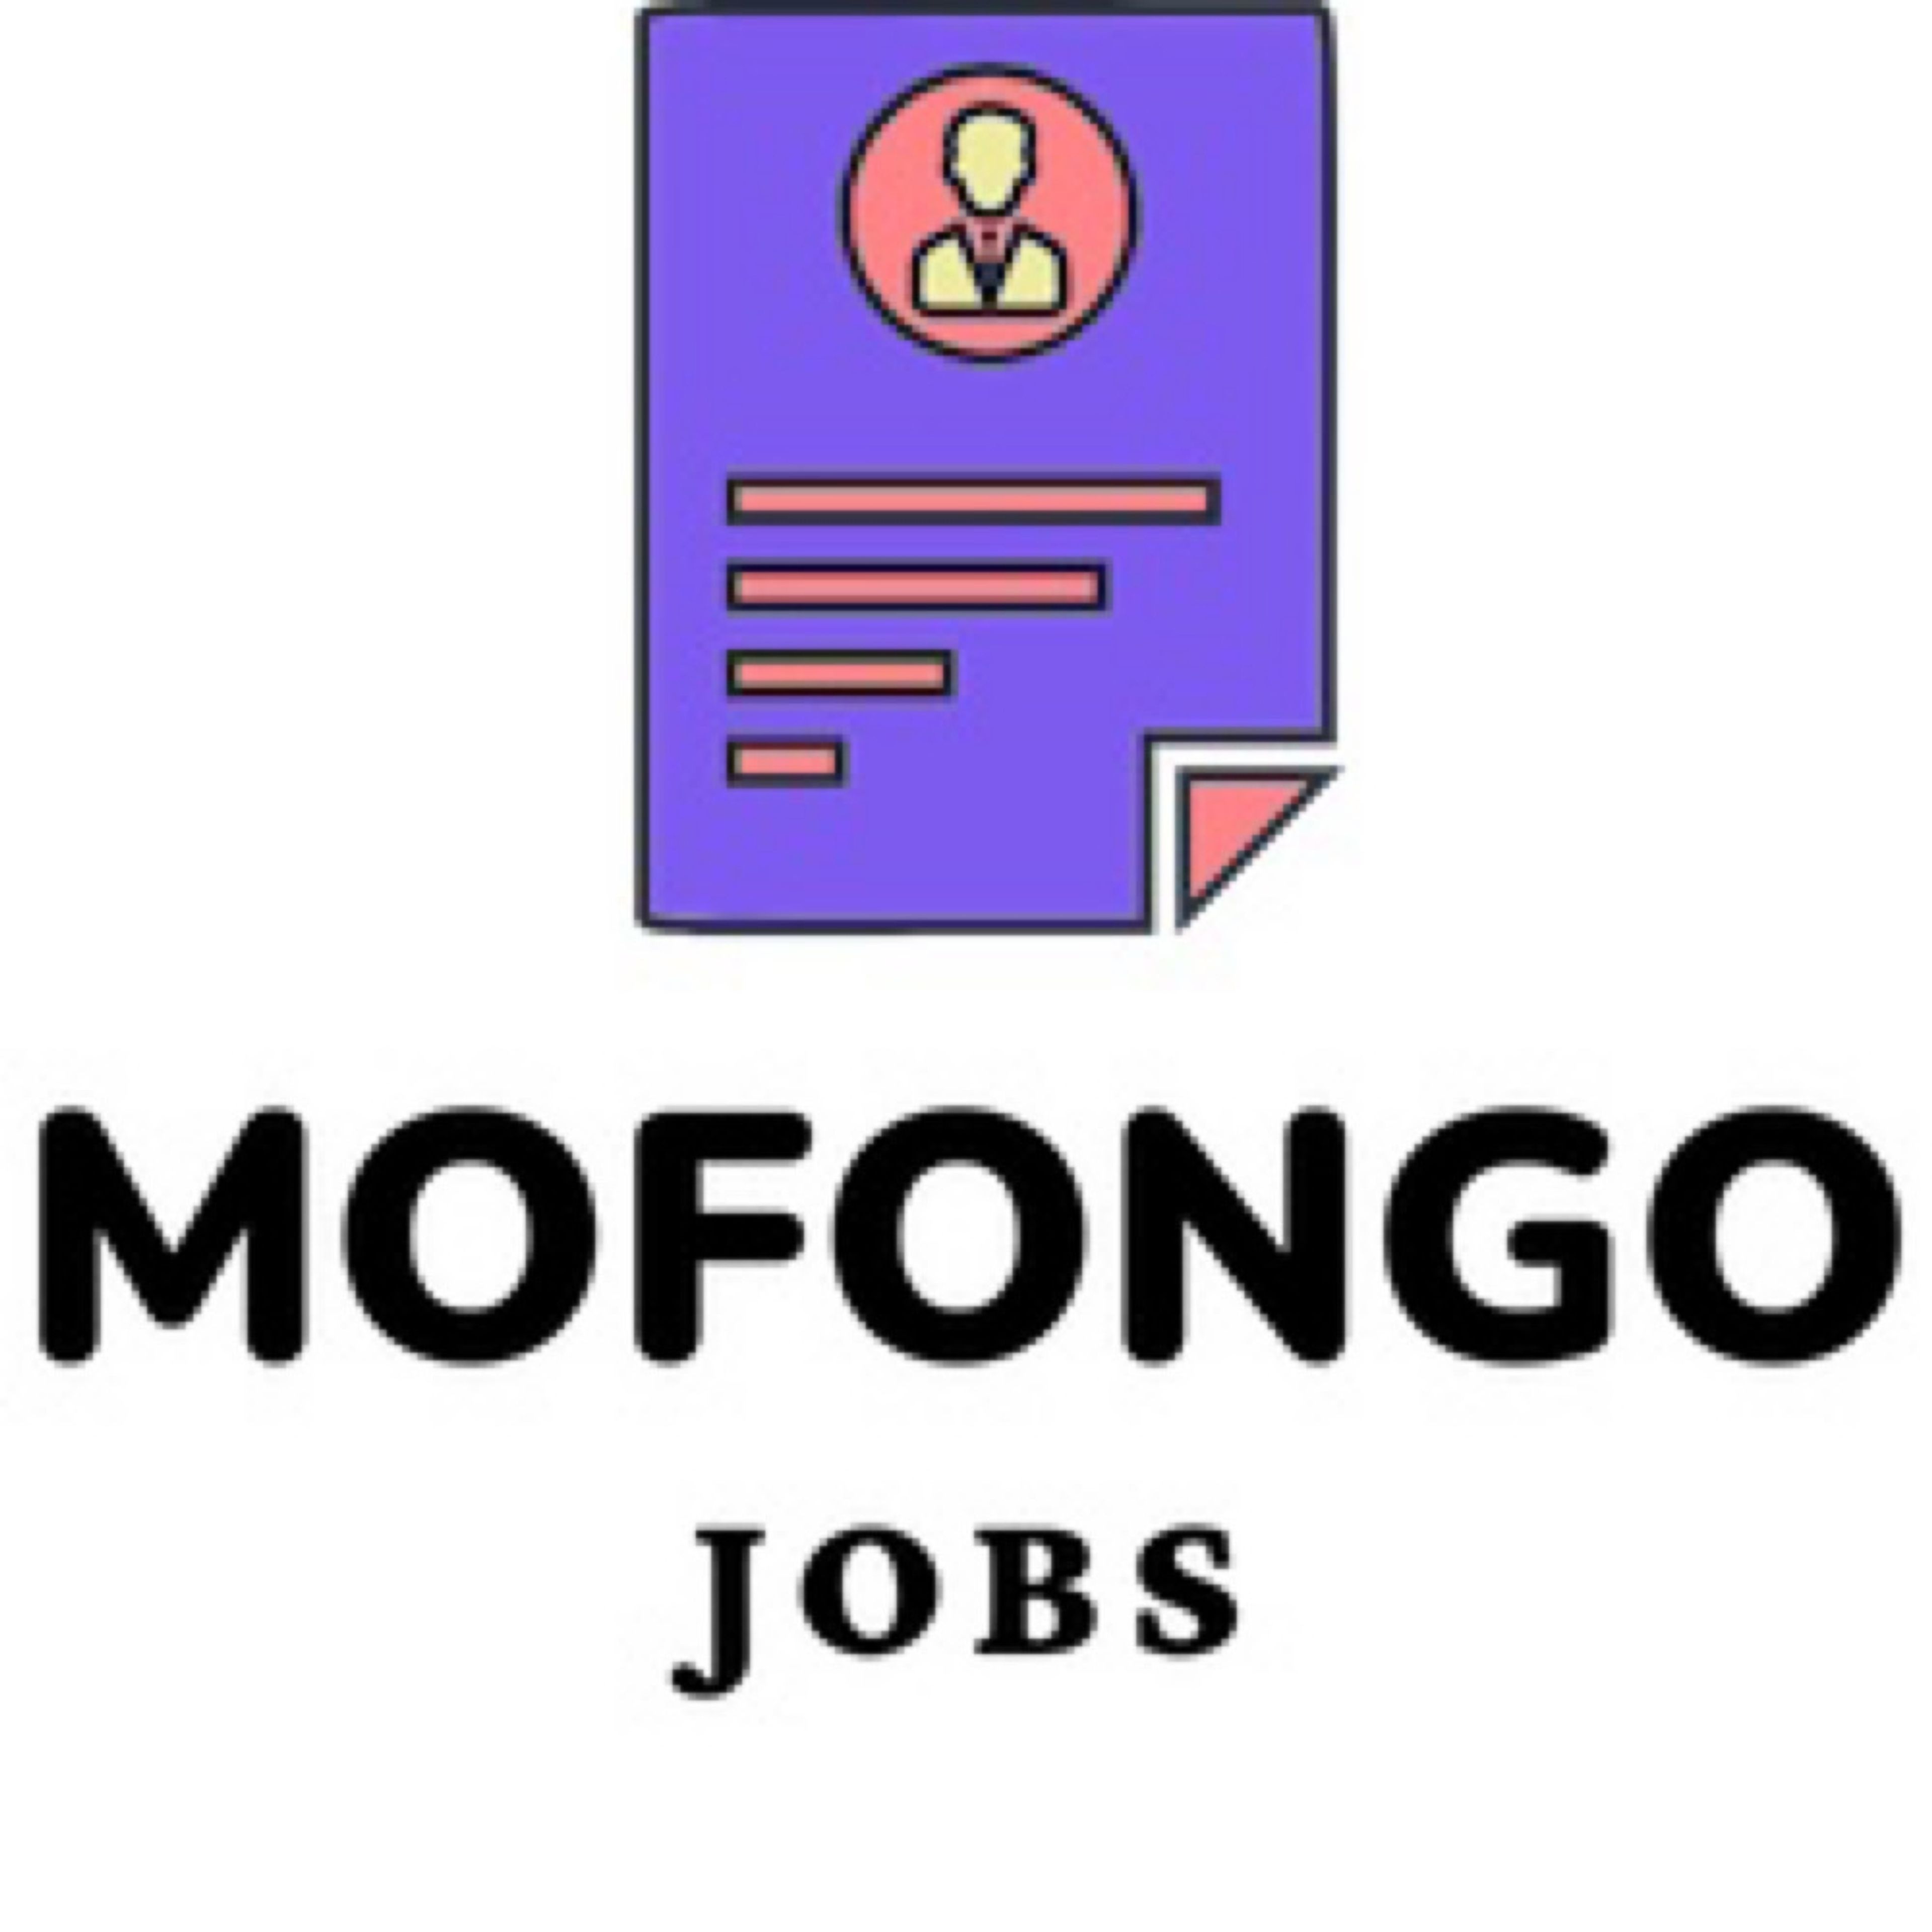 Mofongo Jobs cover image